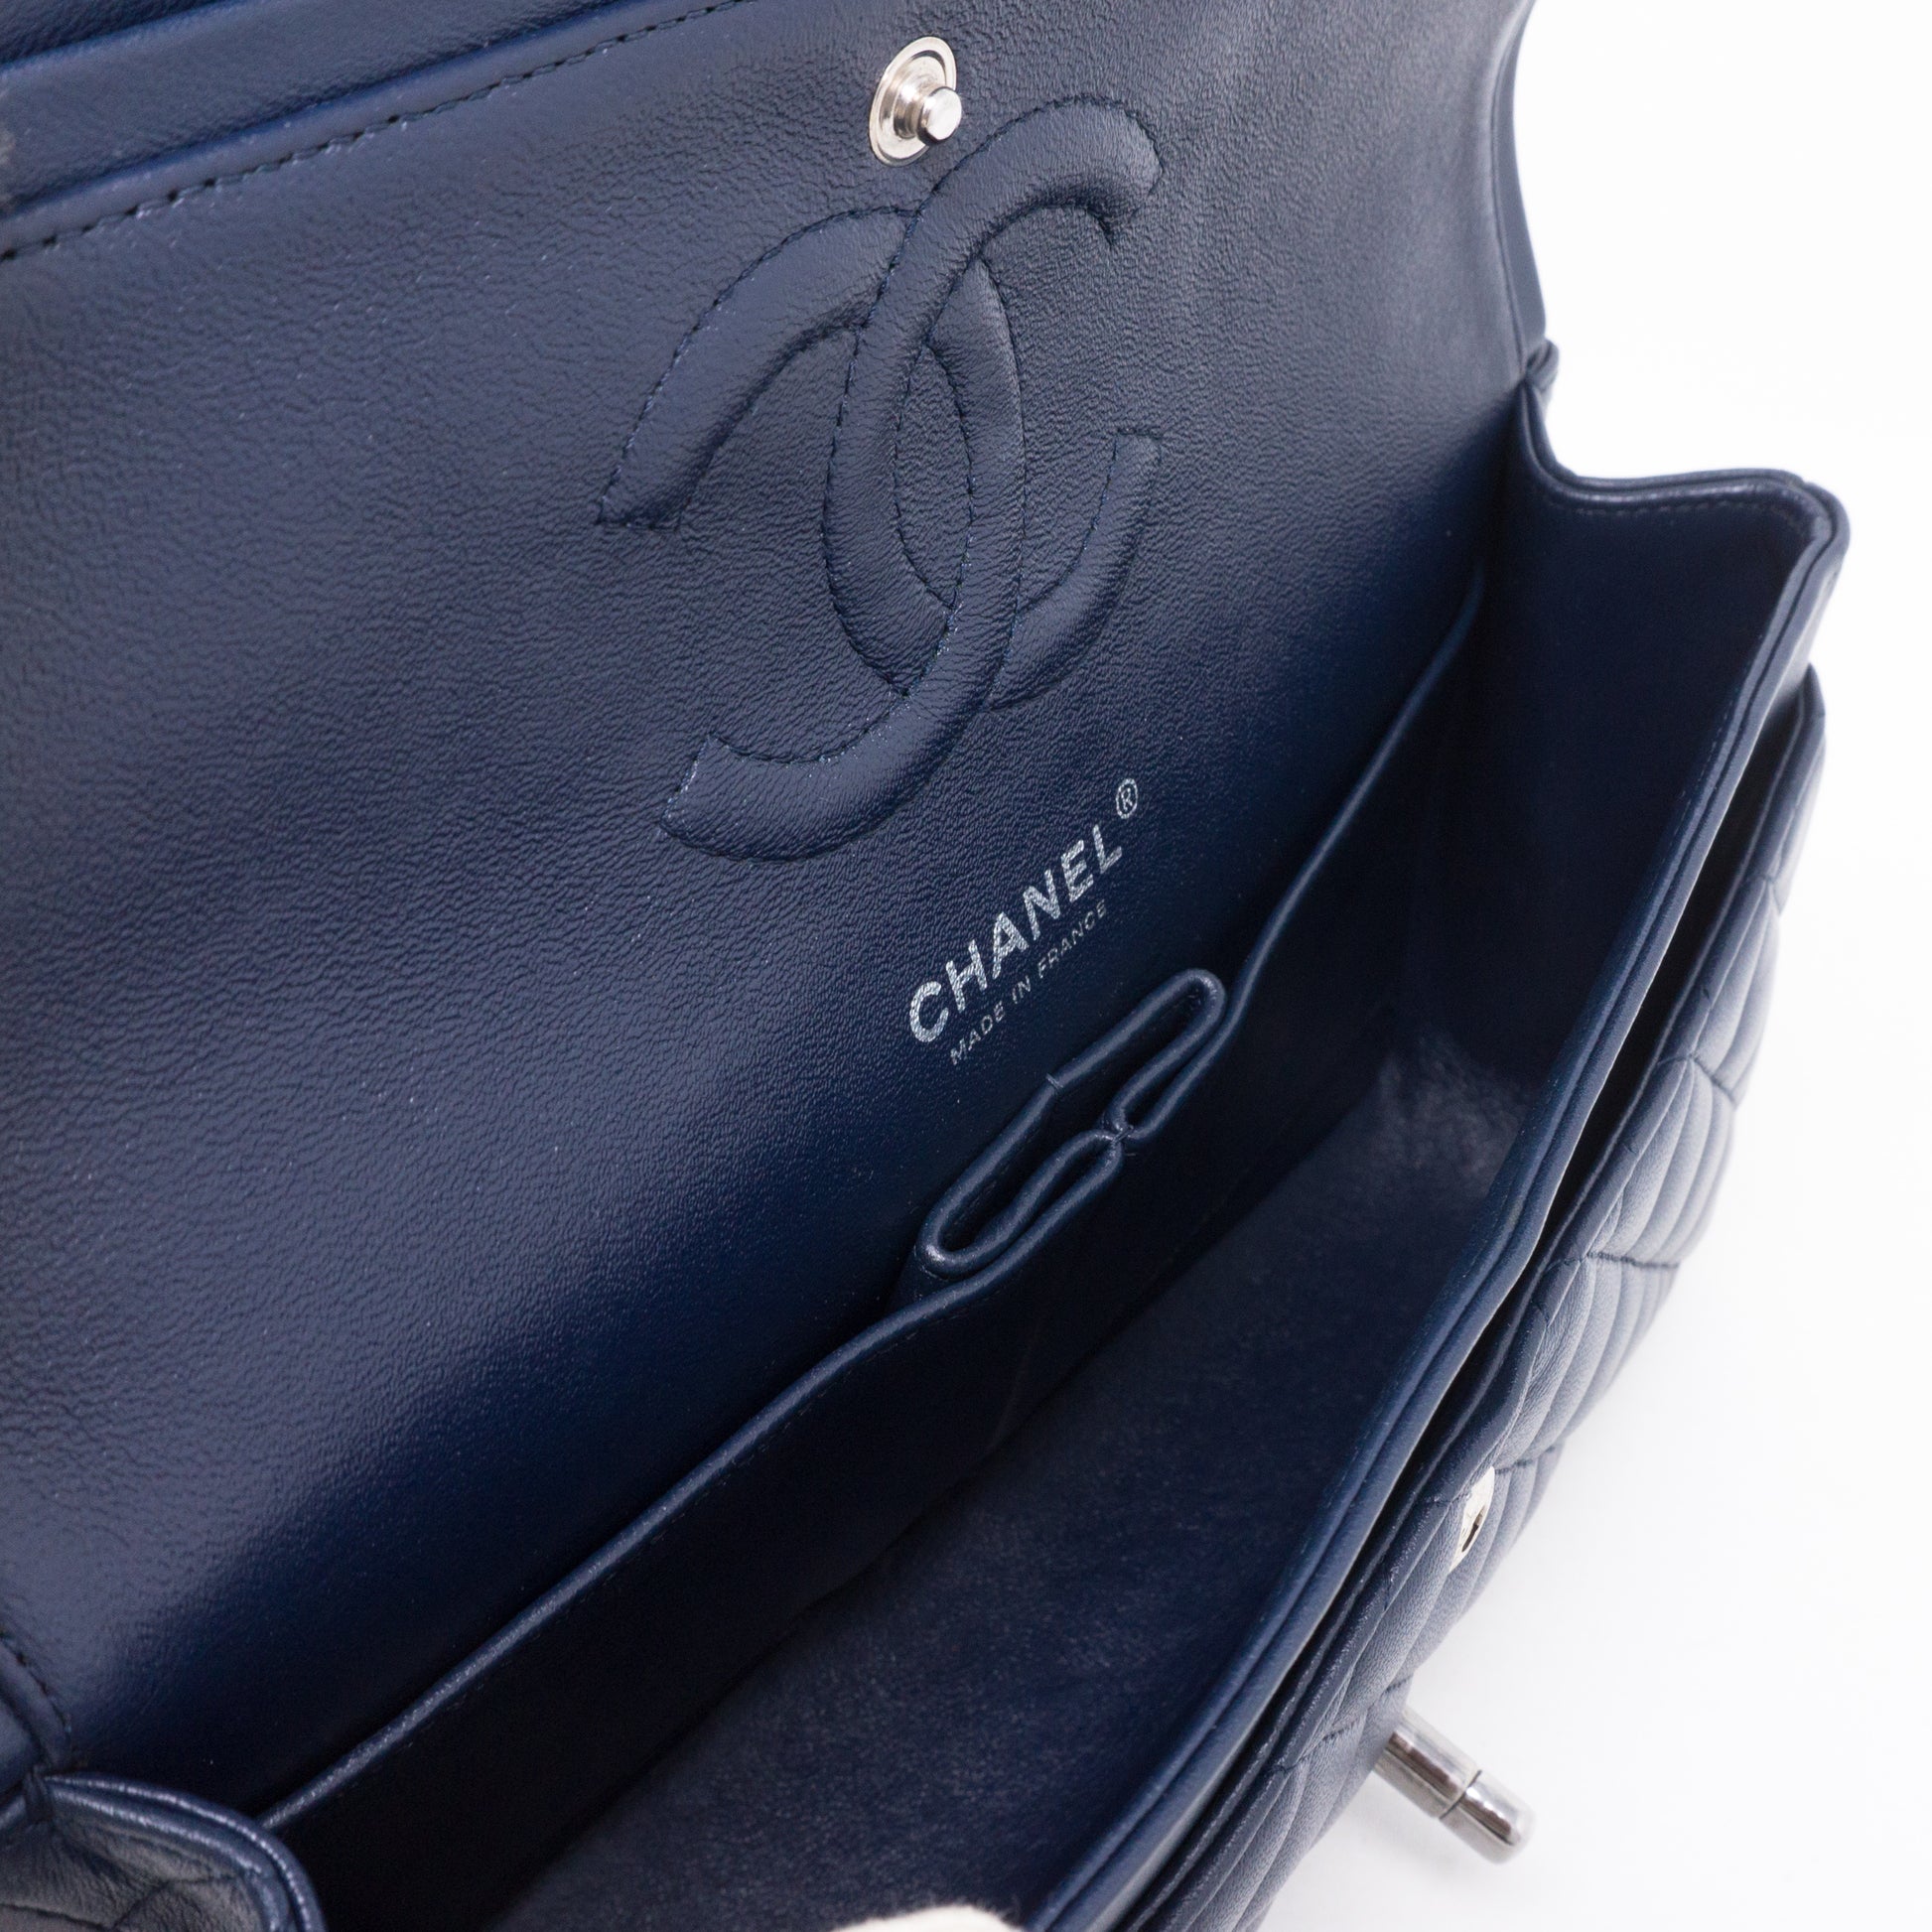 Chanel Navy Blue Caviar Medium Classic Double Flap Bag GHW